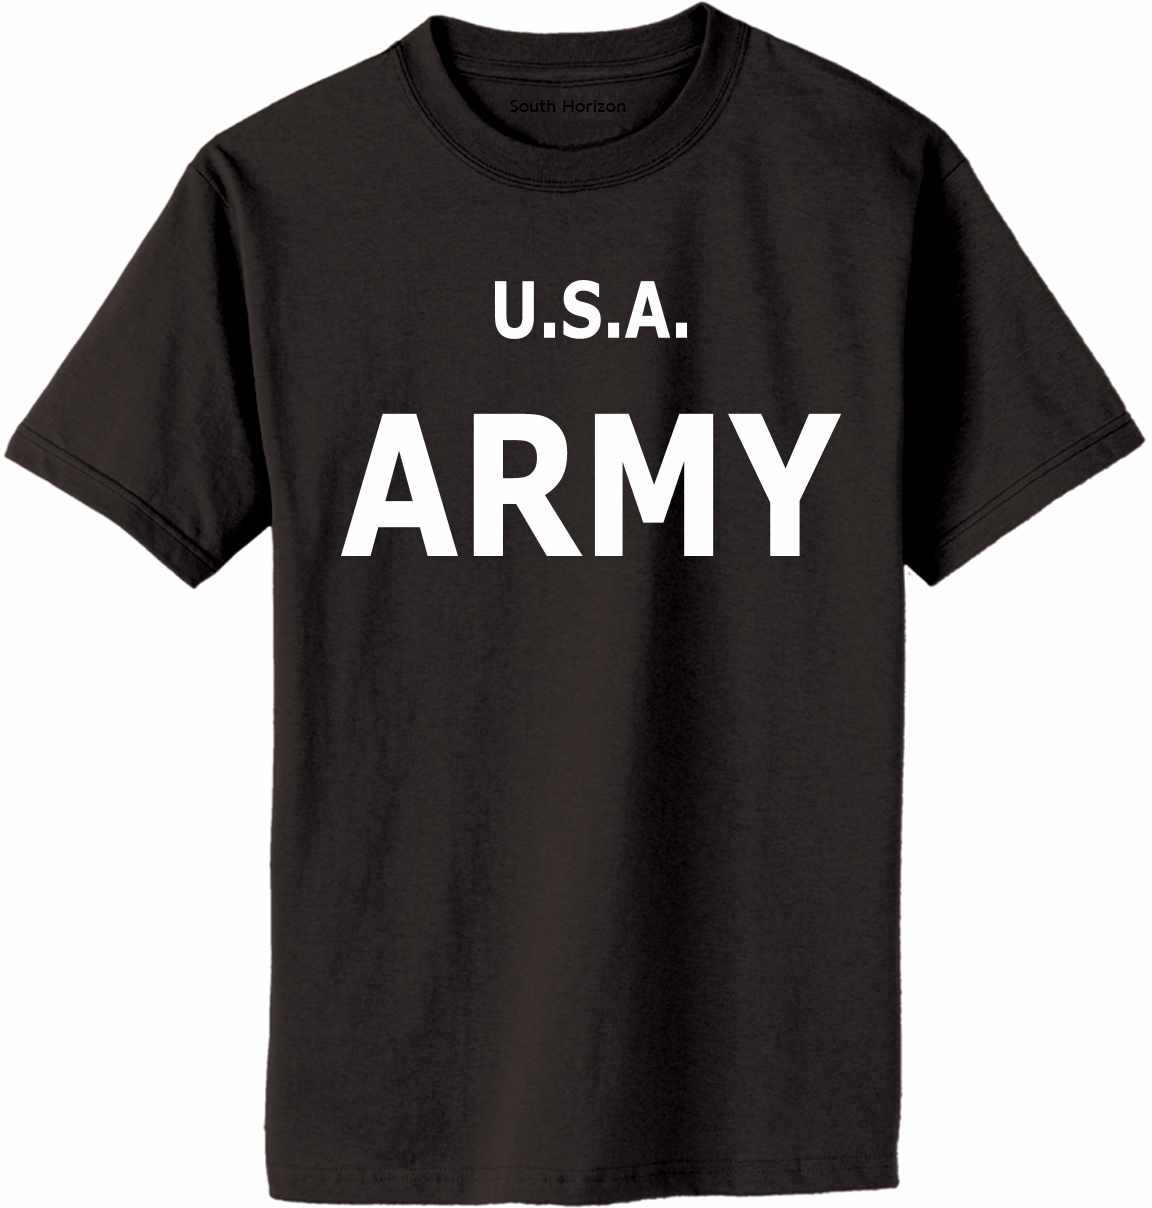 USA ARMY Adult T-Shirt (#374-1)